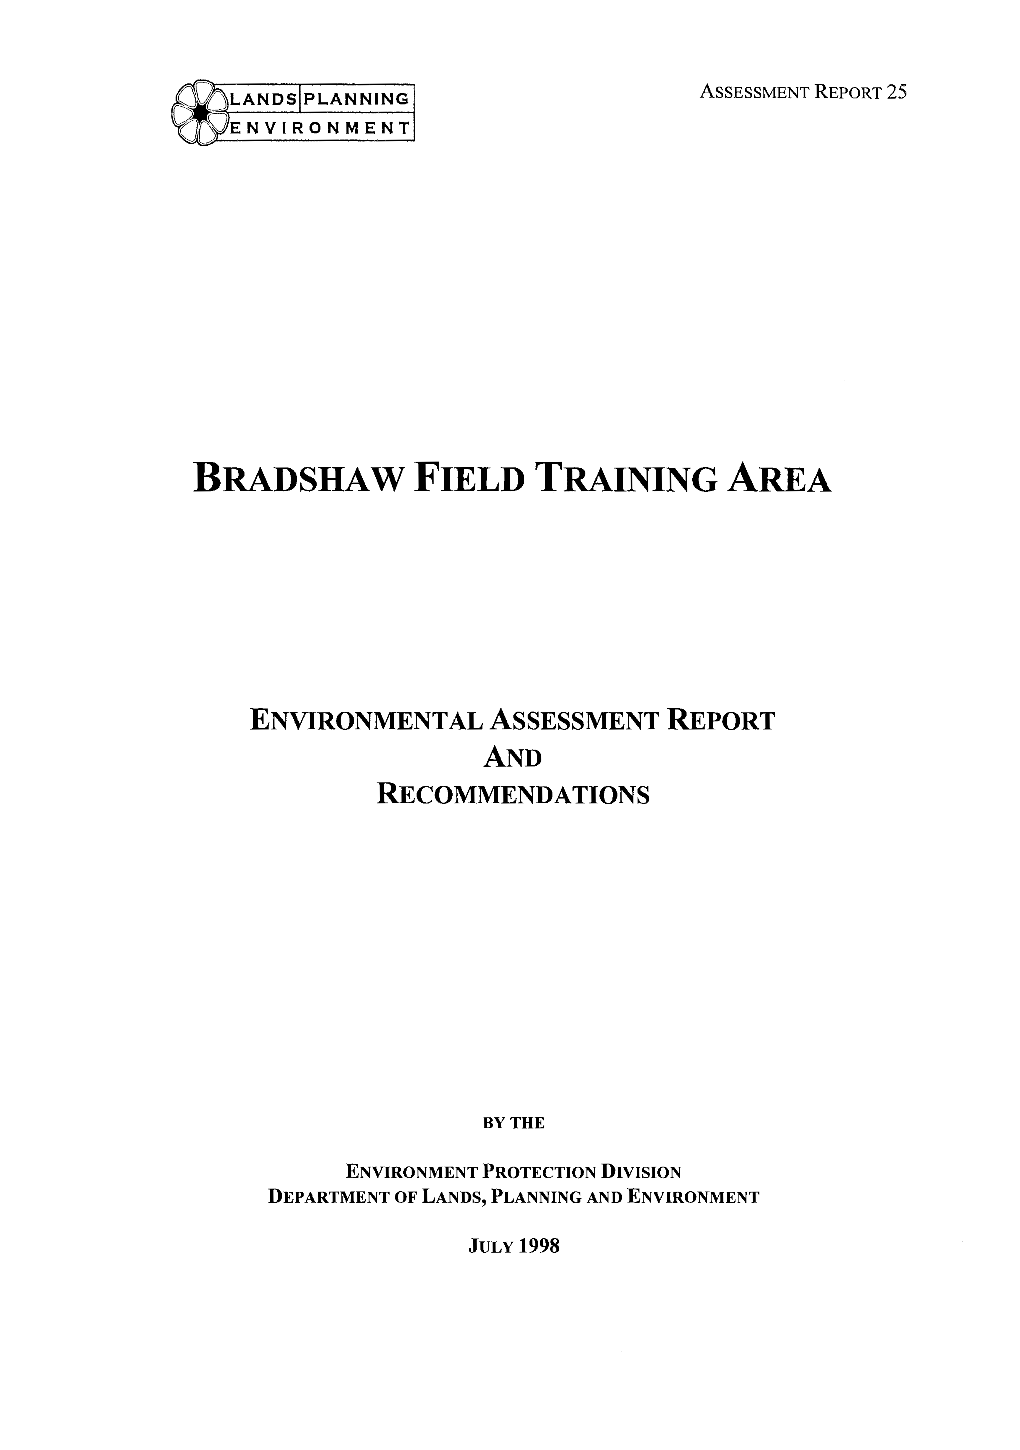 Bradshaw Field Training Area